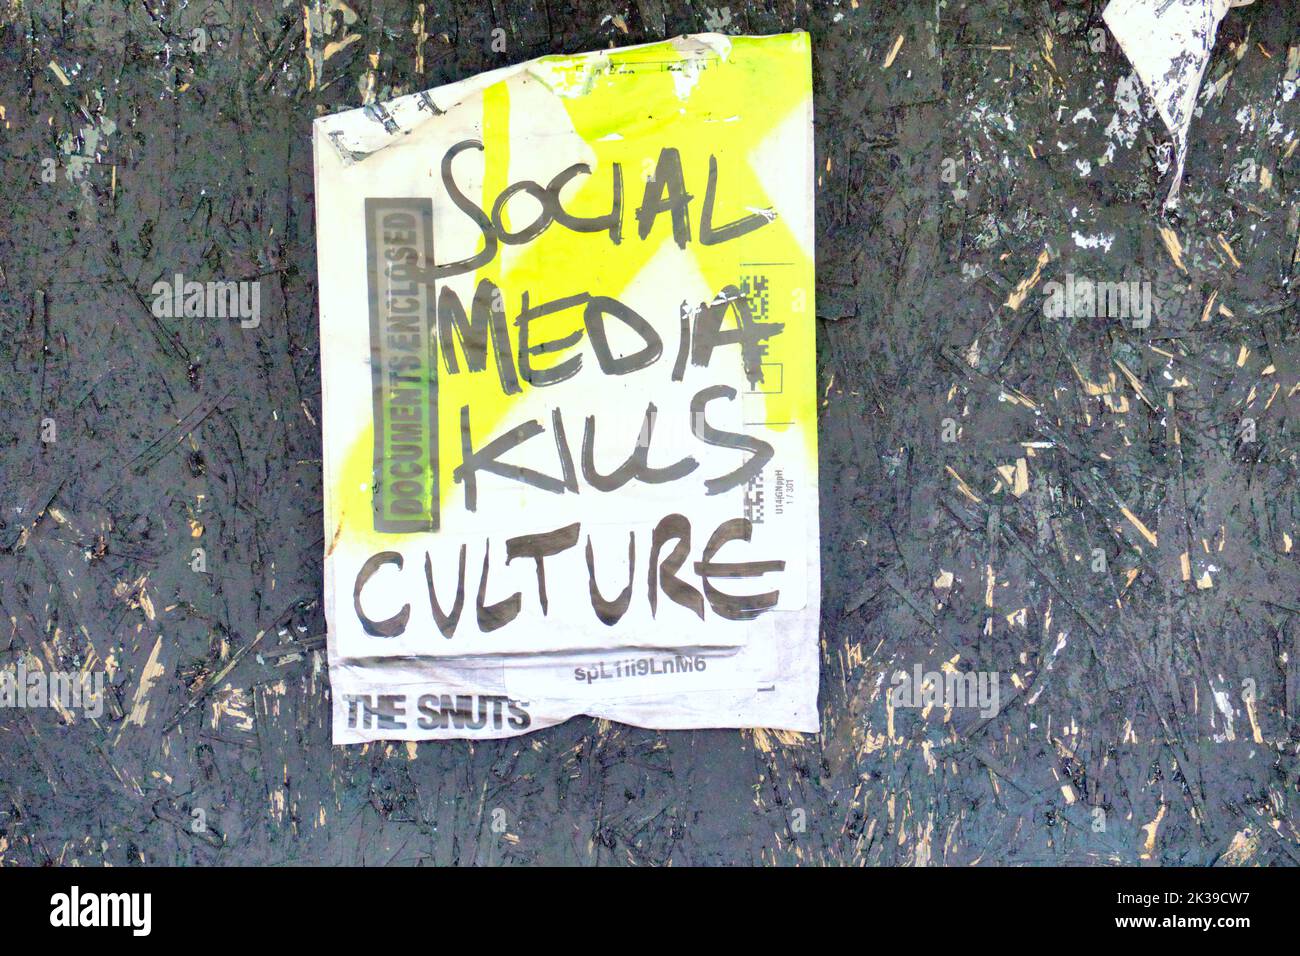 Social media kills culture Social media kills music? – The Snuts release Zuckerpunch  poster on wall Glasgow, Scotland, UK Stock Photo